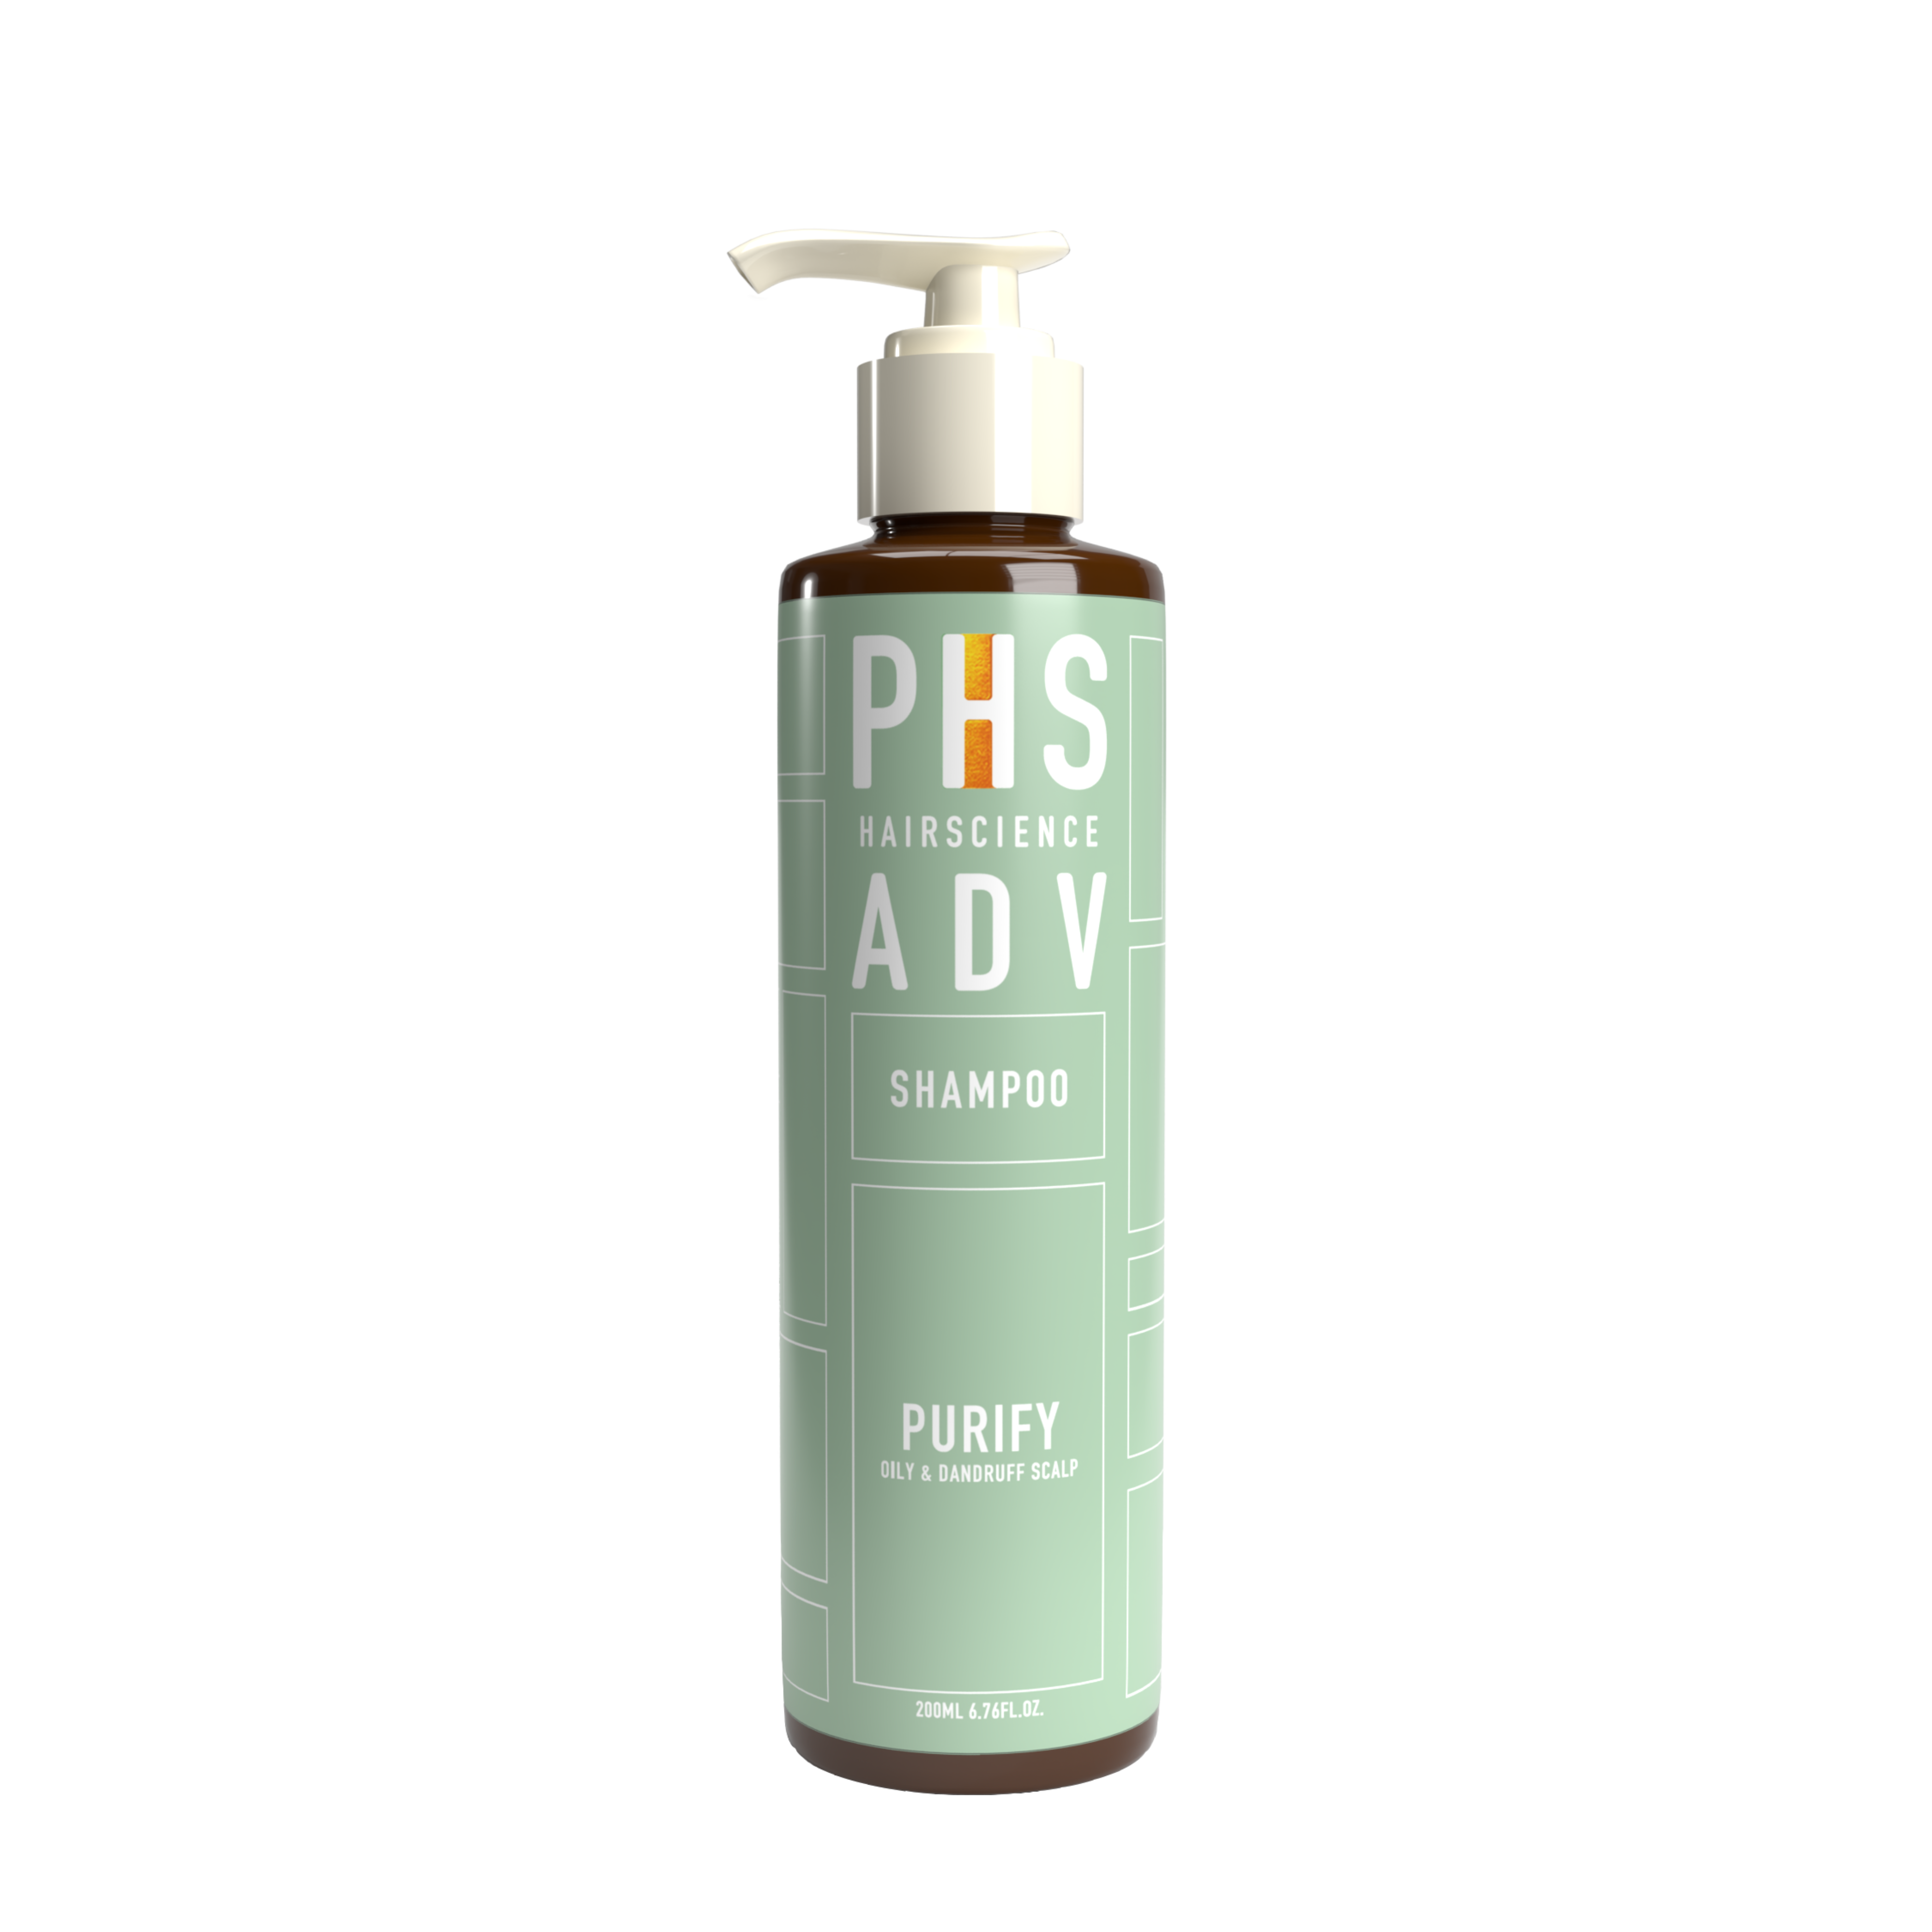 PHS Hairscience ADV Purify Shampoo 200ml